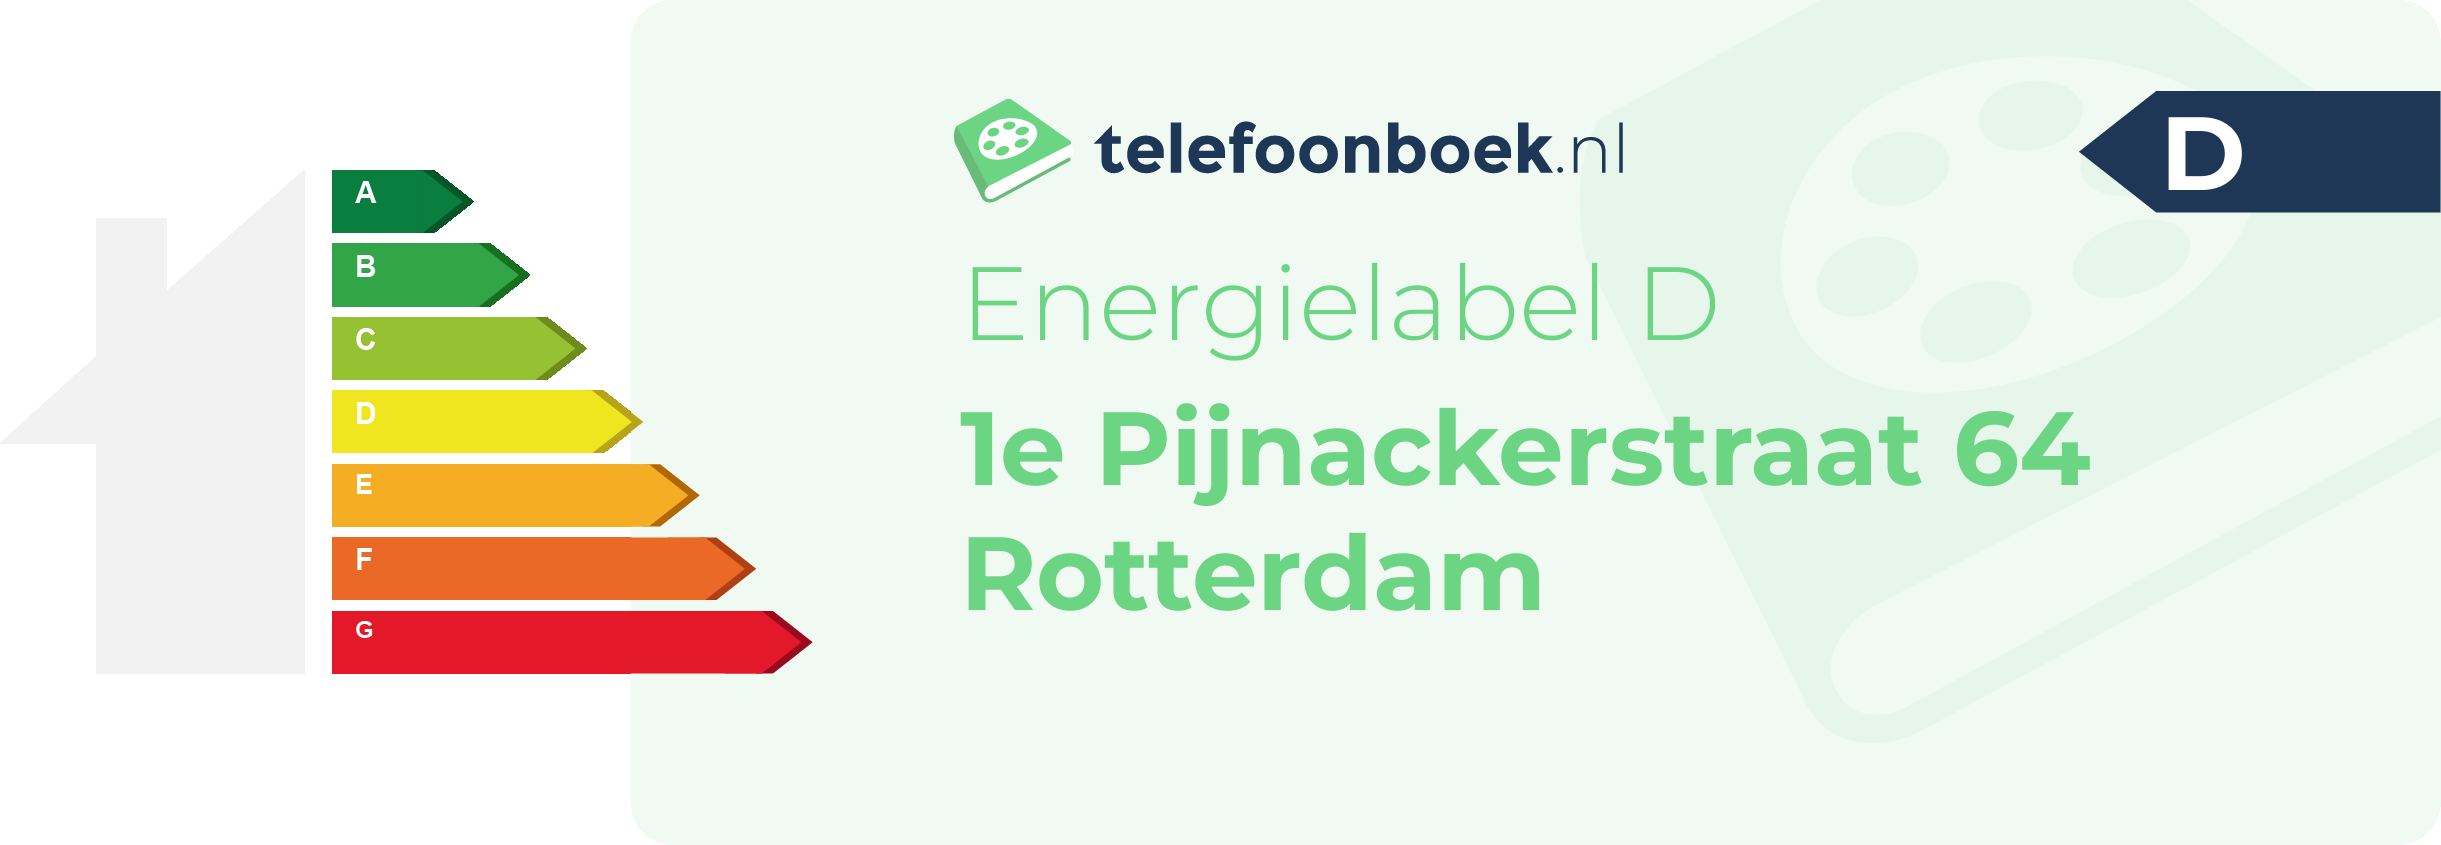 Energielabel 1e Pijnackerstraat 64 Rotterdam